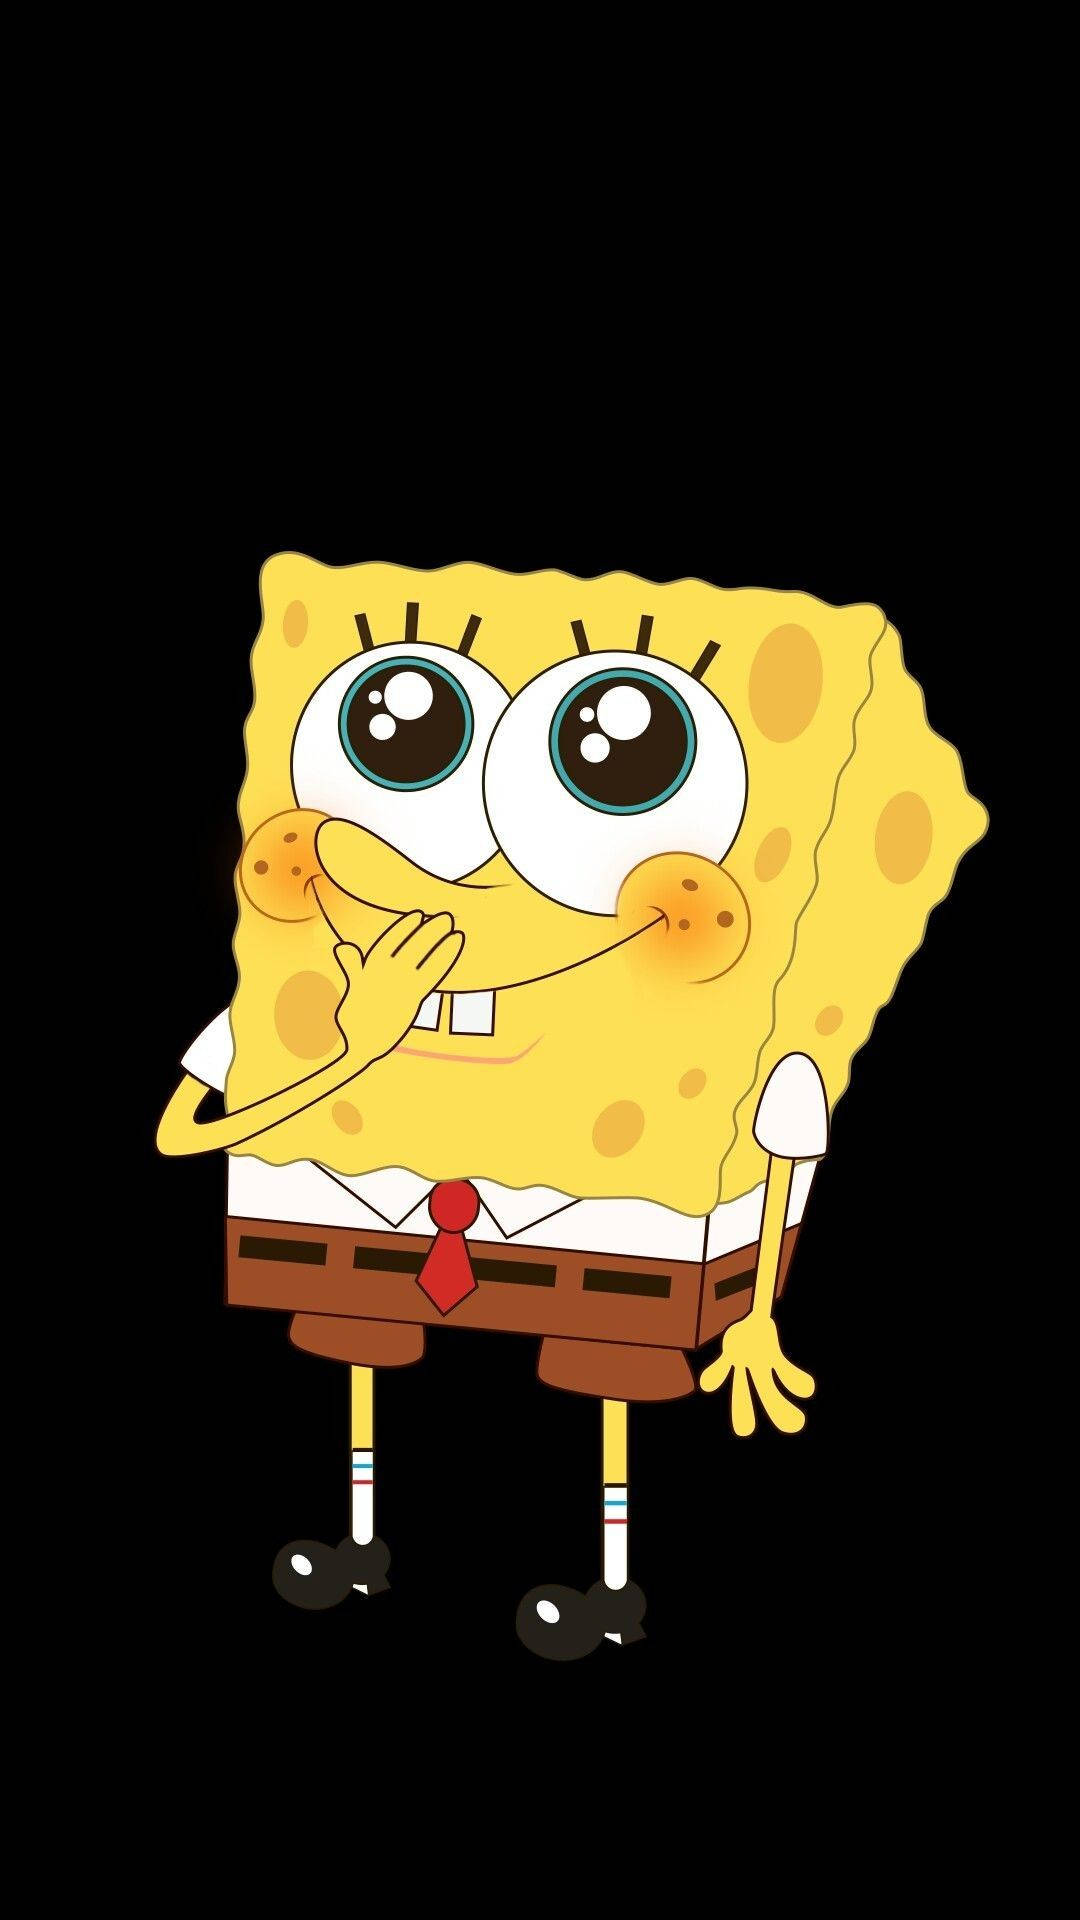 Cute Spongebob Cartoon With Flushed Cheeks